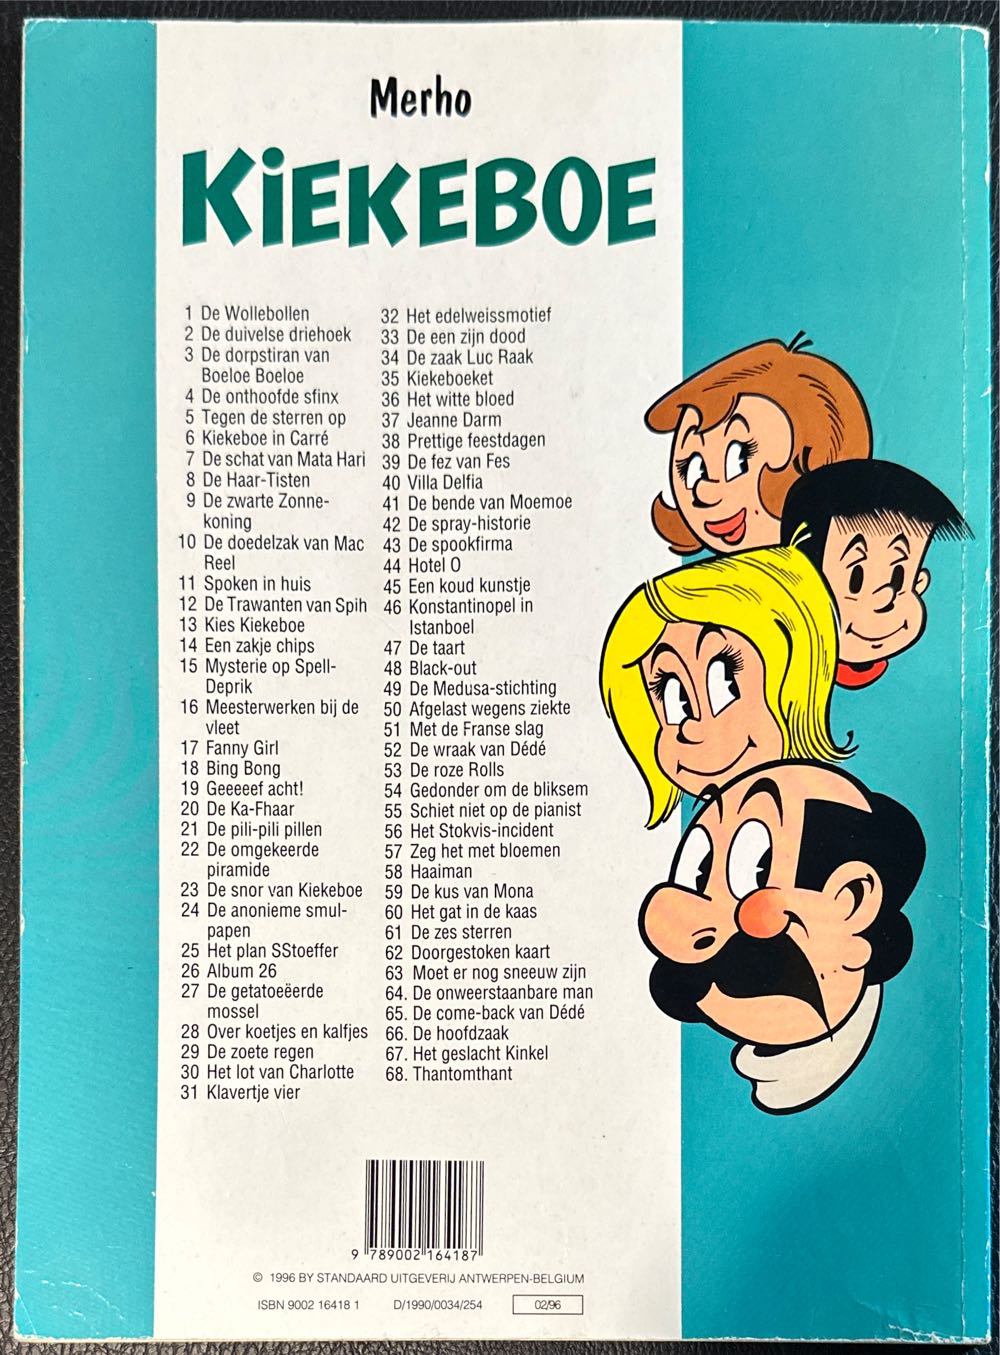 De Kiekeboes 30 Het Lot Van Charlotte  (February) magazine collectible [Barcode 9789002164187] - Main Image 2